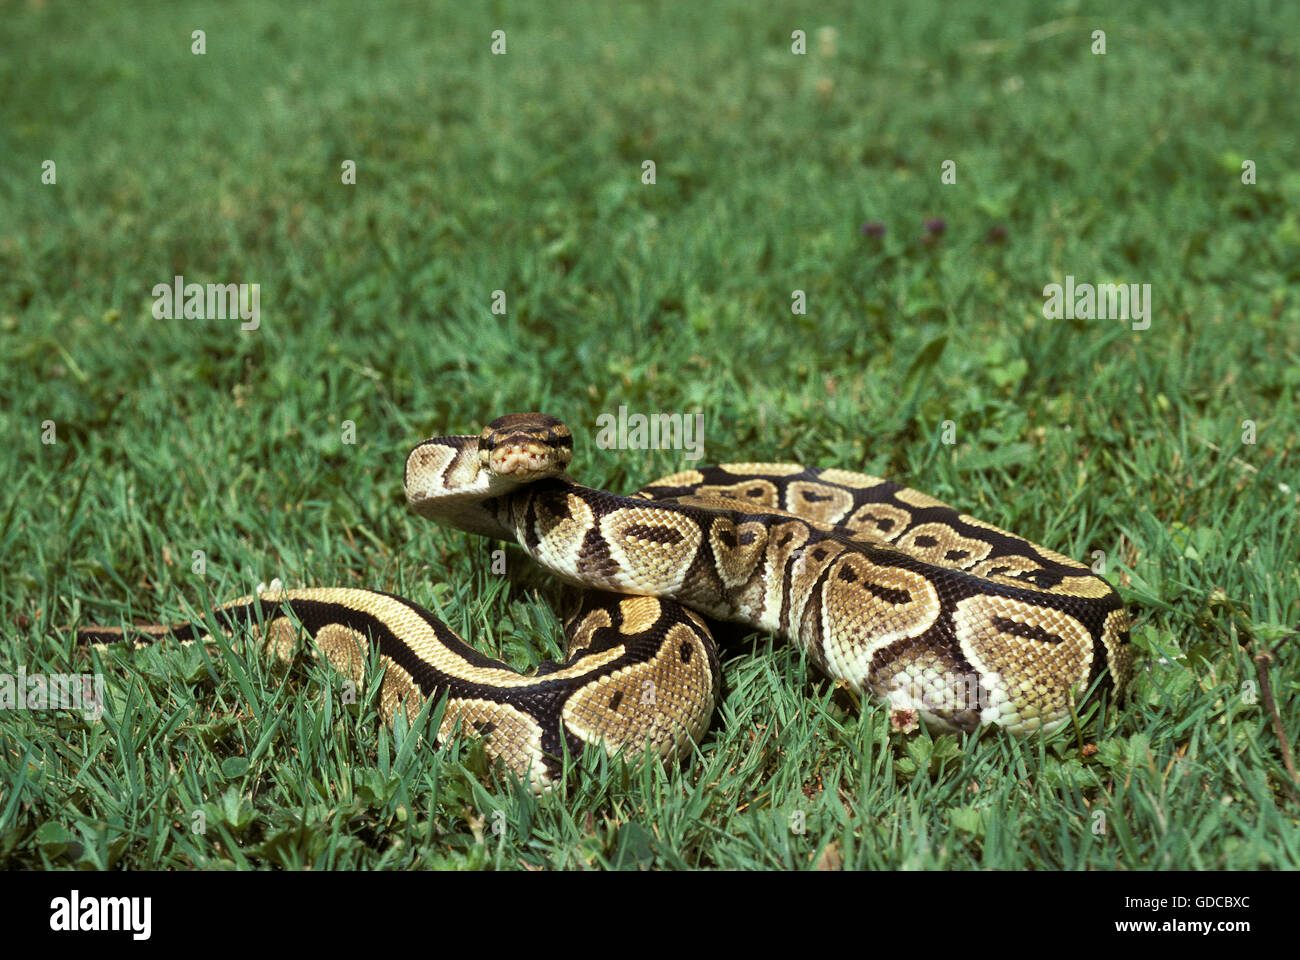 Royal Python, python regius, Adult on Grass Stock Photo